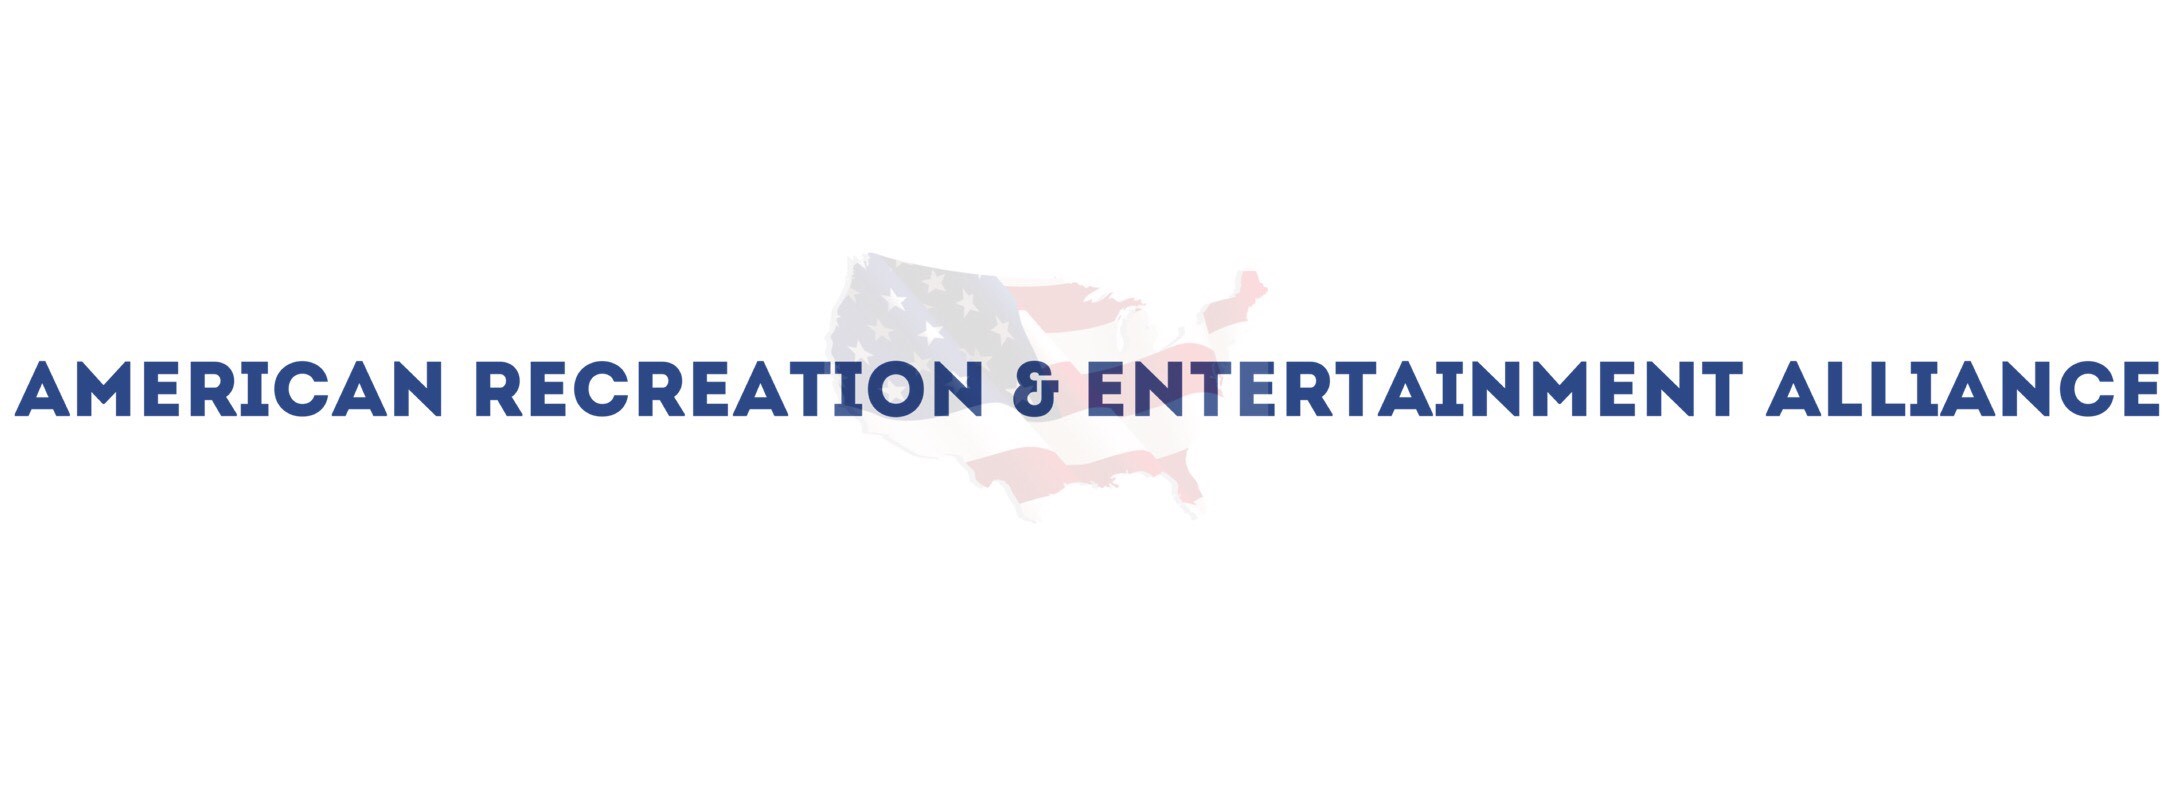 American Recreation & Entertainment Alliance